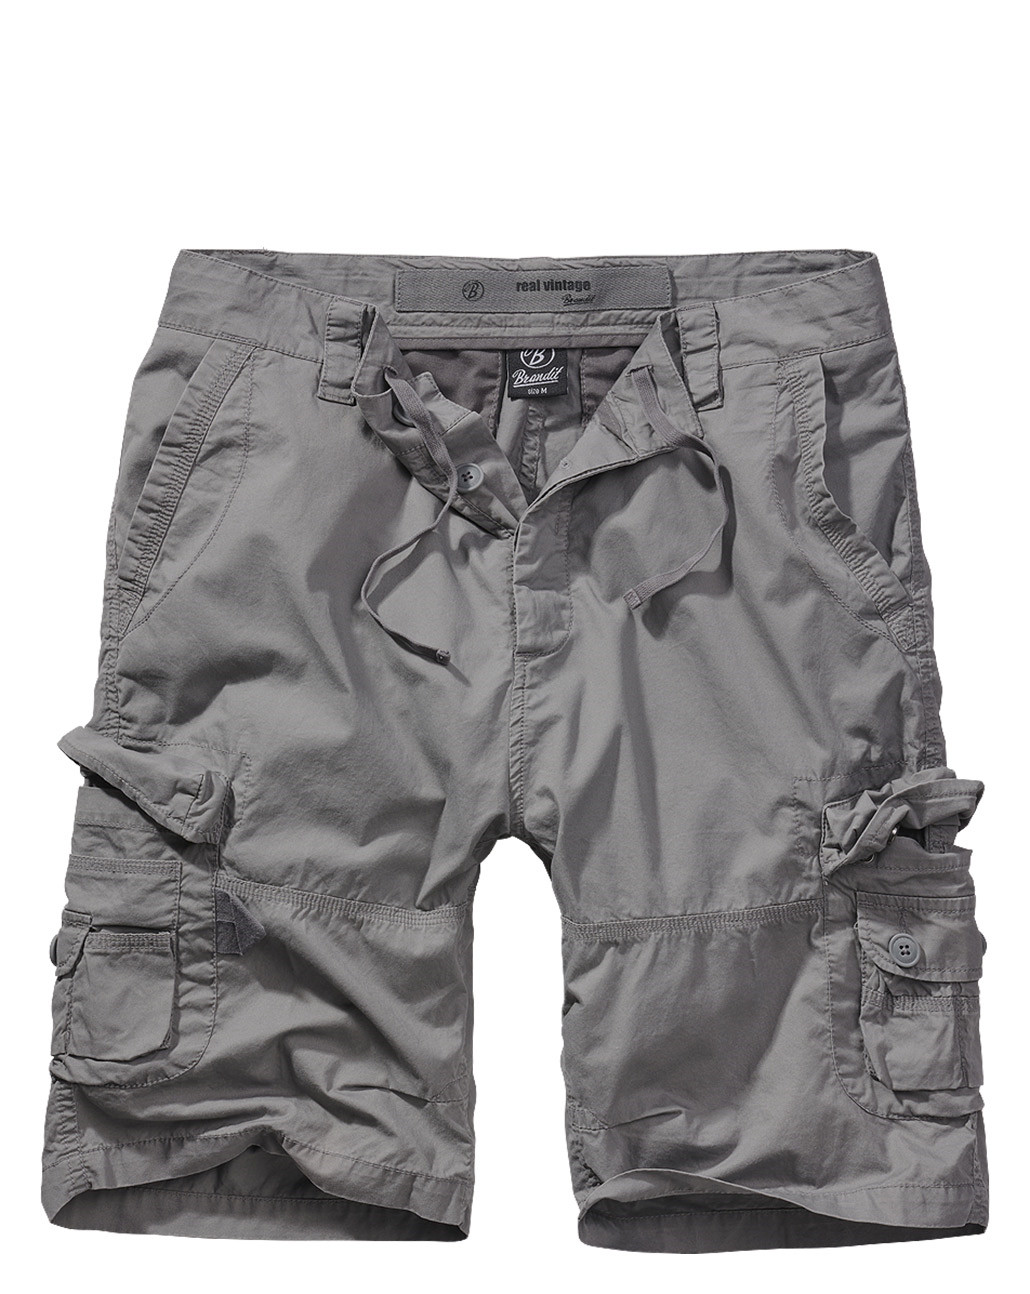 Brandit Ty Shorts (Charcoal, M)